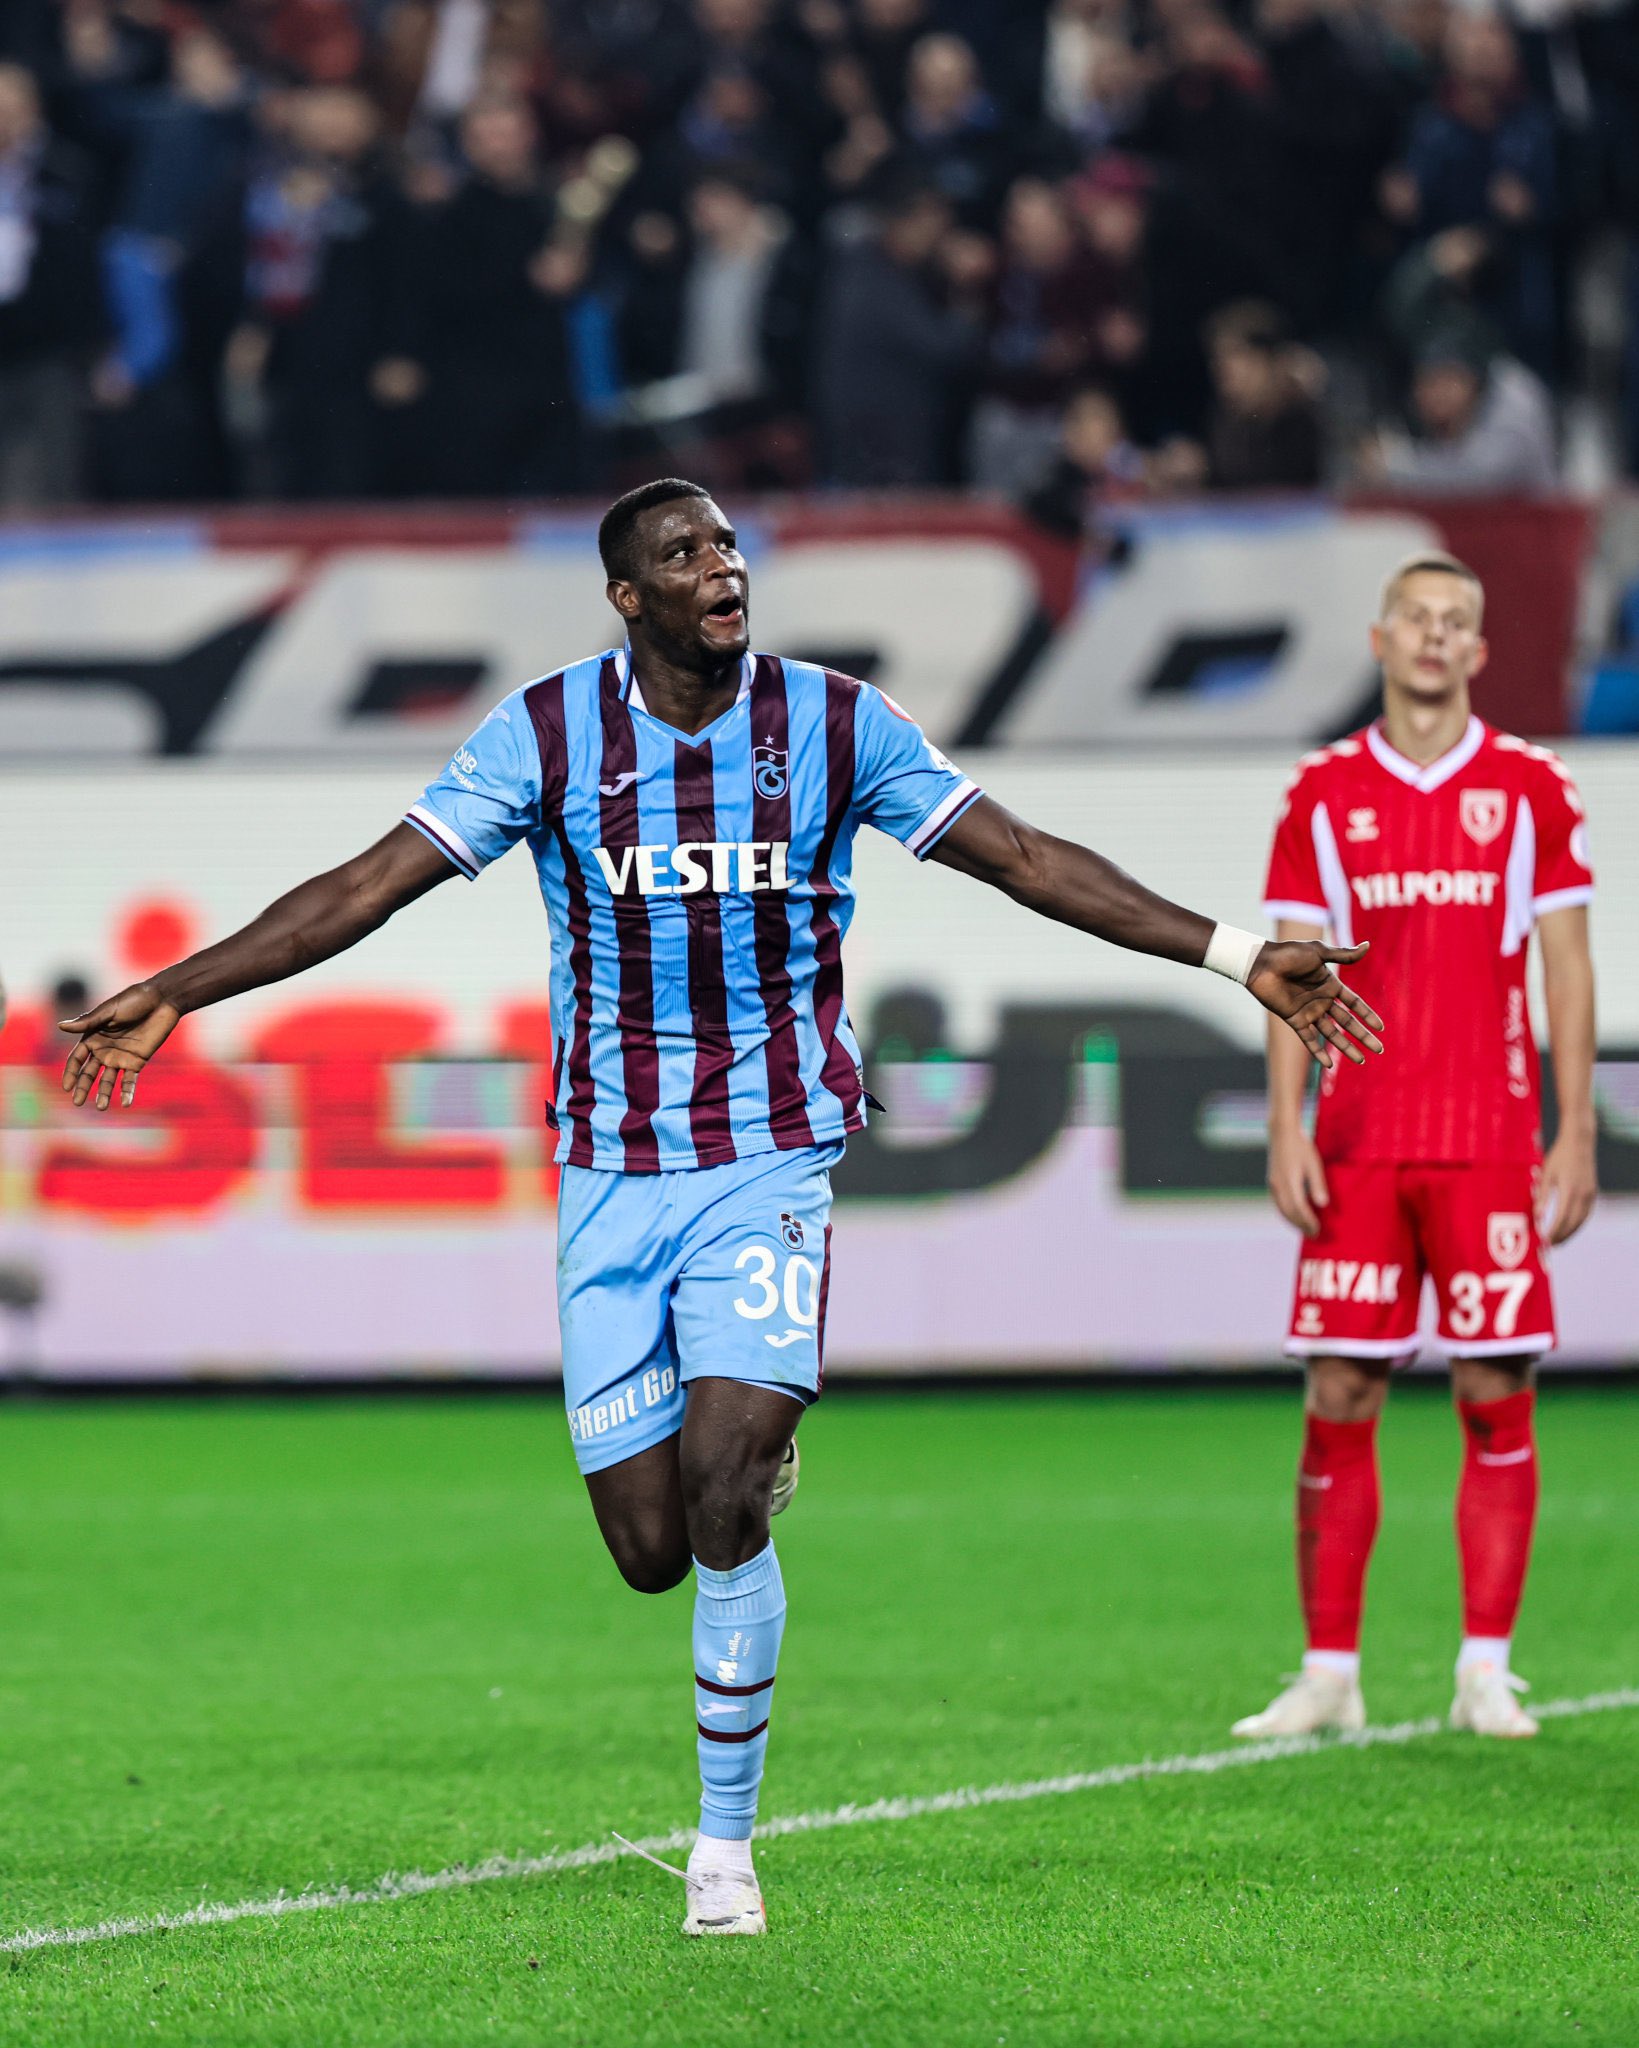 Paul Onuachu scores in Trabzonspor win over Samsunspor after Super Eagles'invite